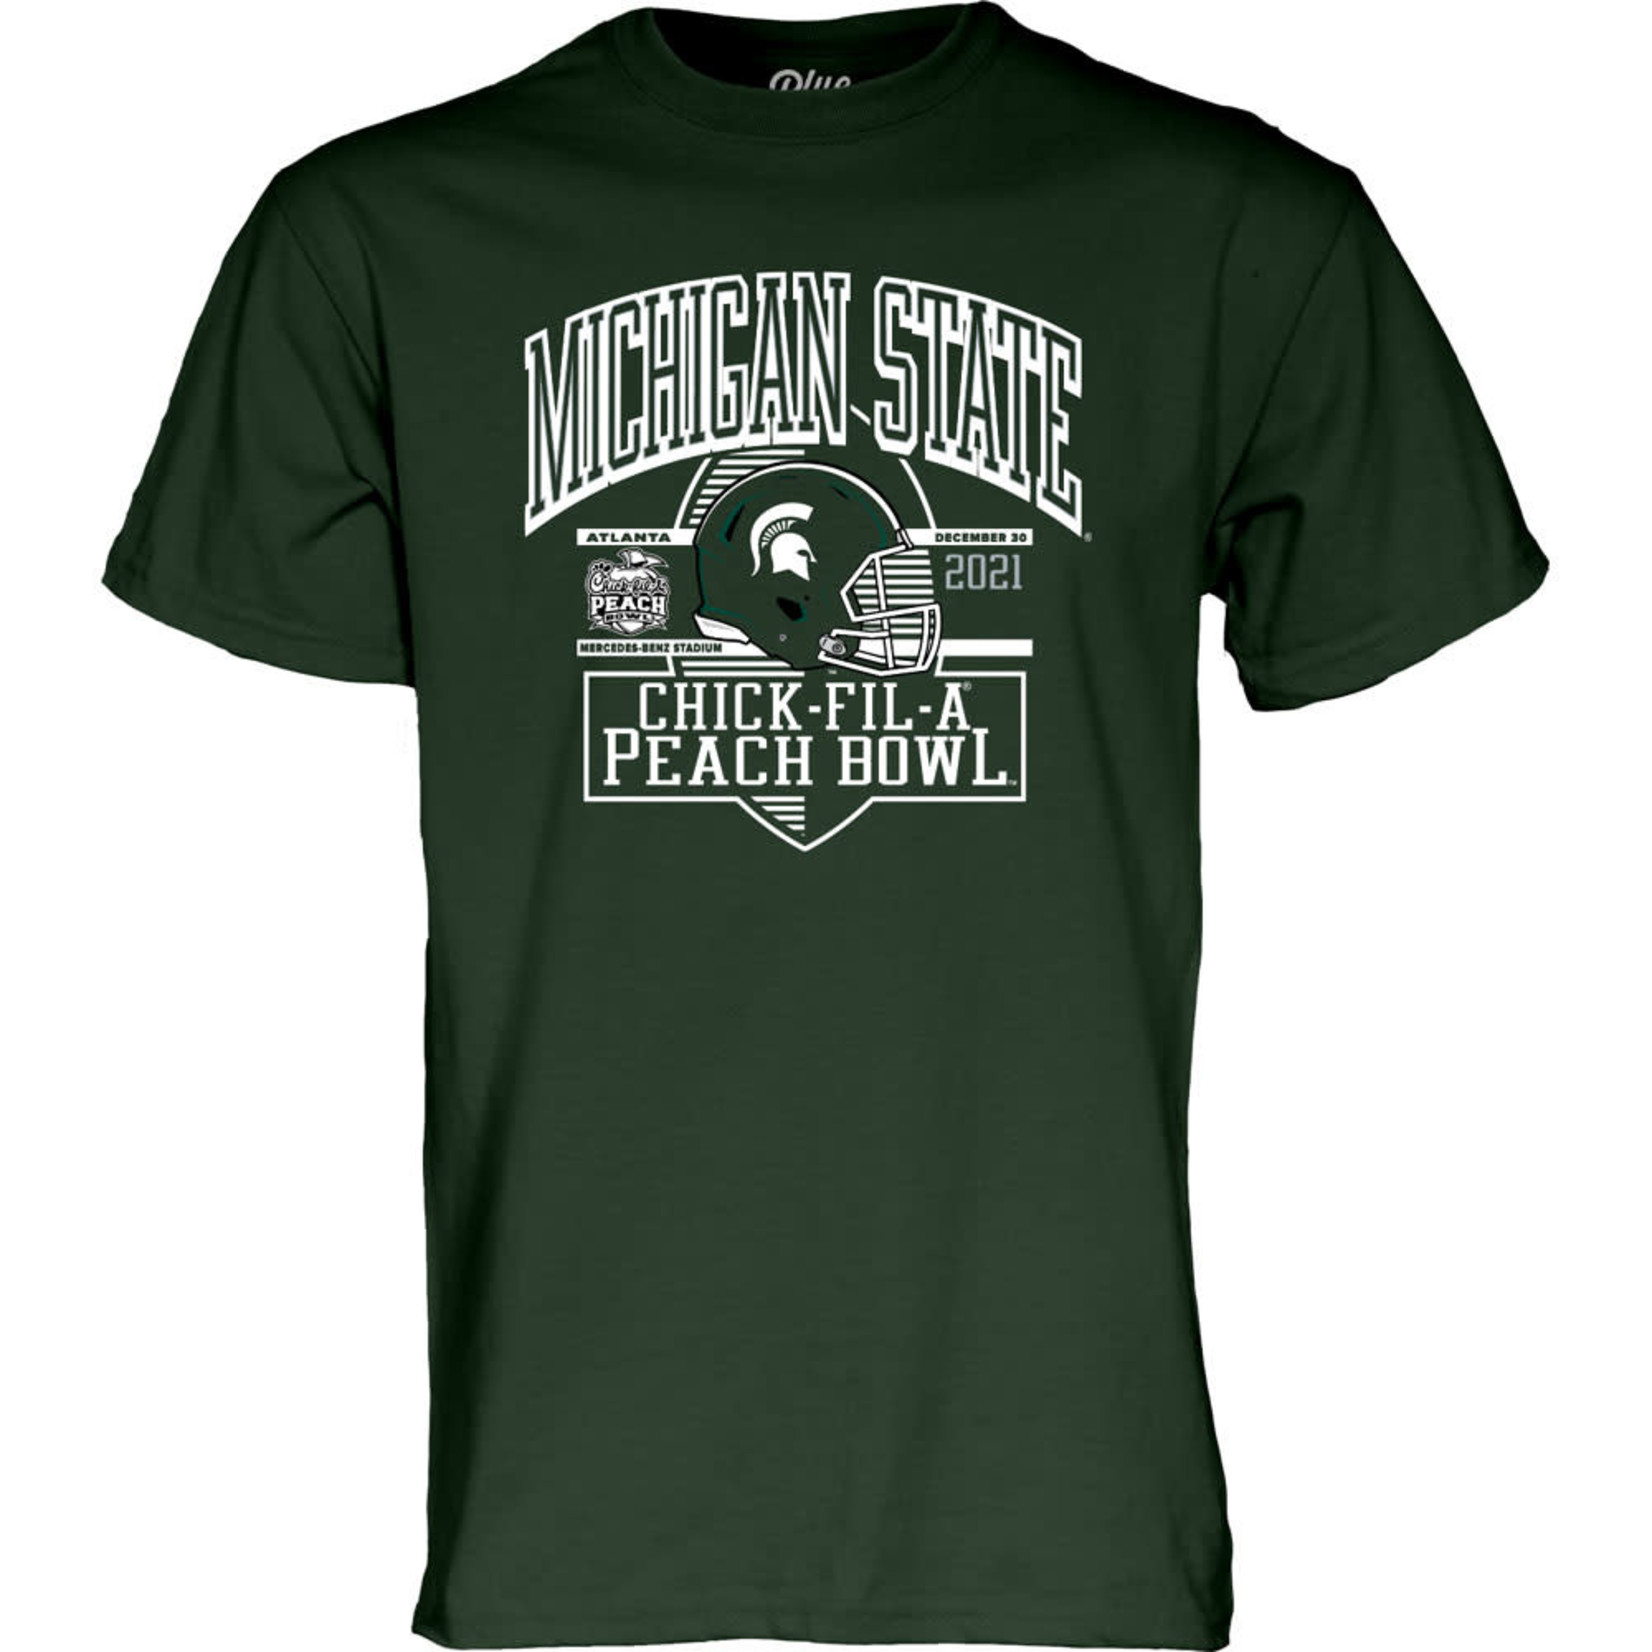 Blue 84 NCAA Michigan State University  Mens Shirt Tee Short Sleeve Peach Bowl 2021